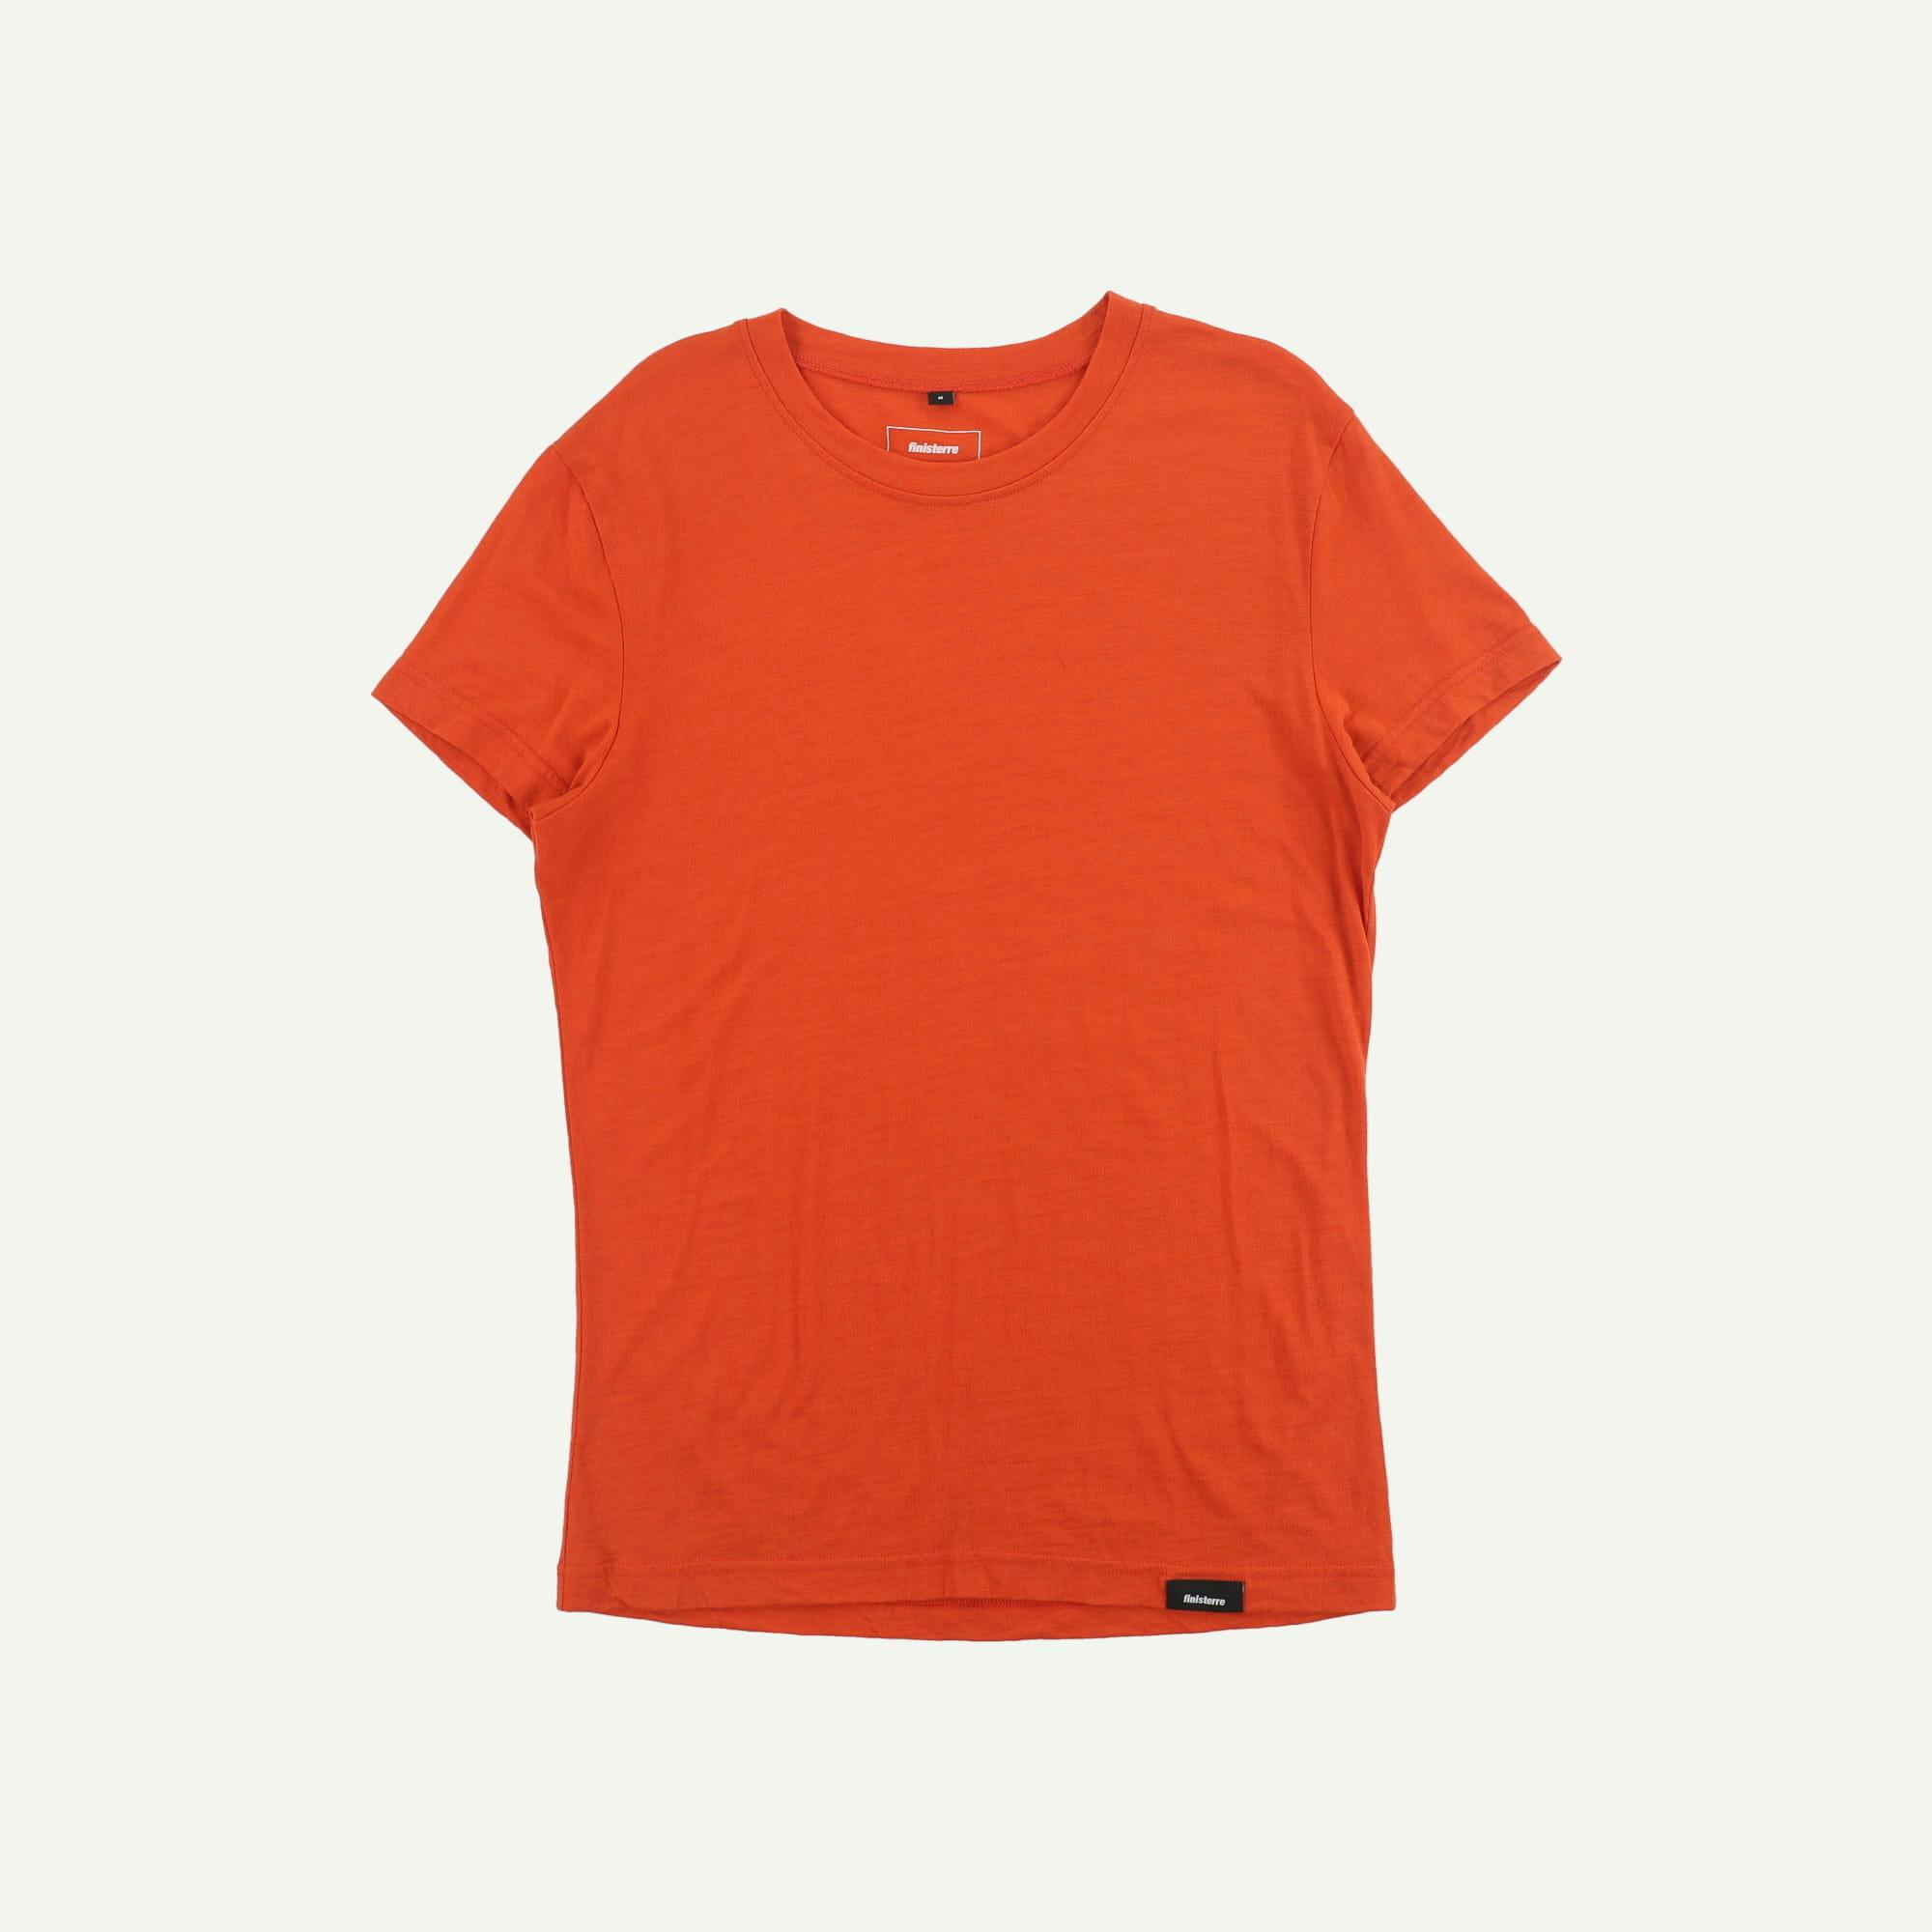 Finisterre As new Orange Baselayer T-shirt